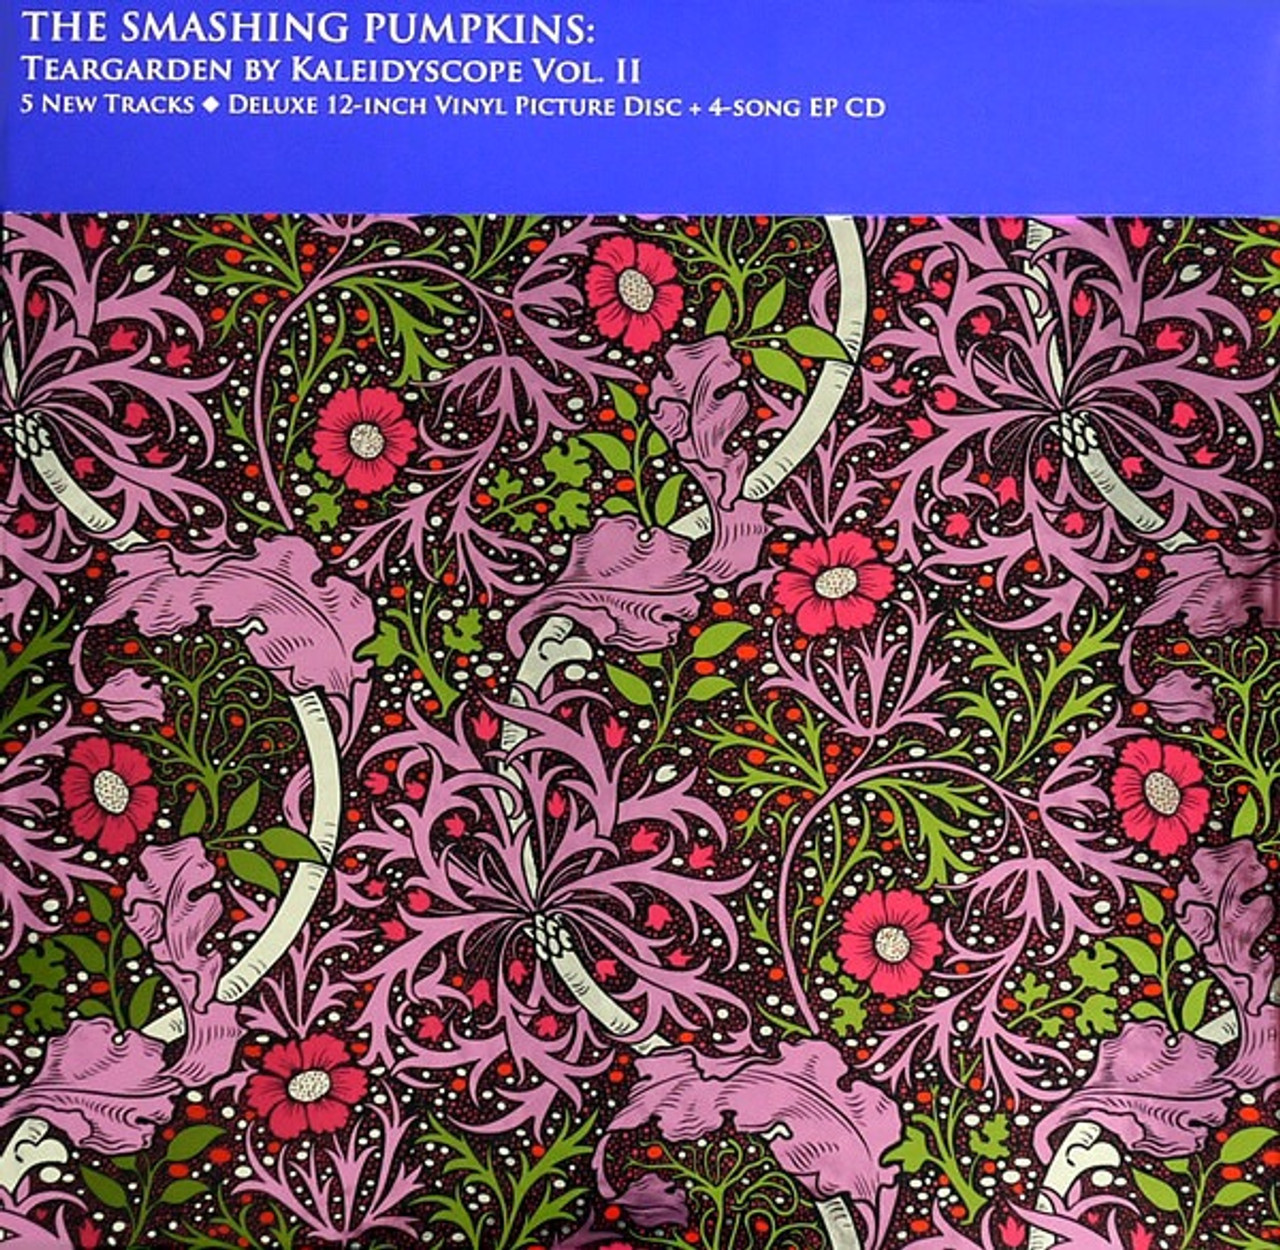 The Smashing Pumpkins - Teargarden By Kaleidyscope Vol. II: The 